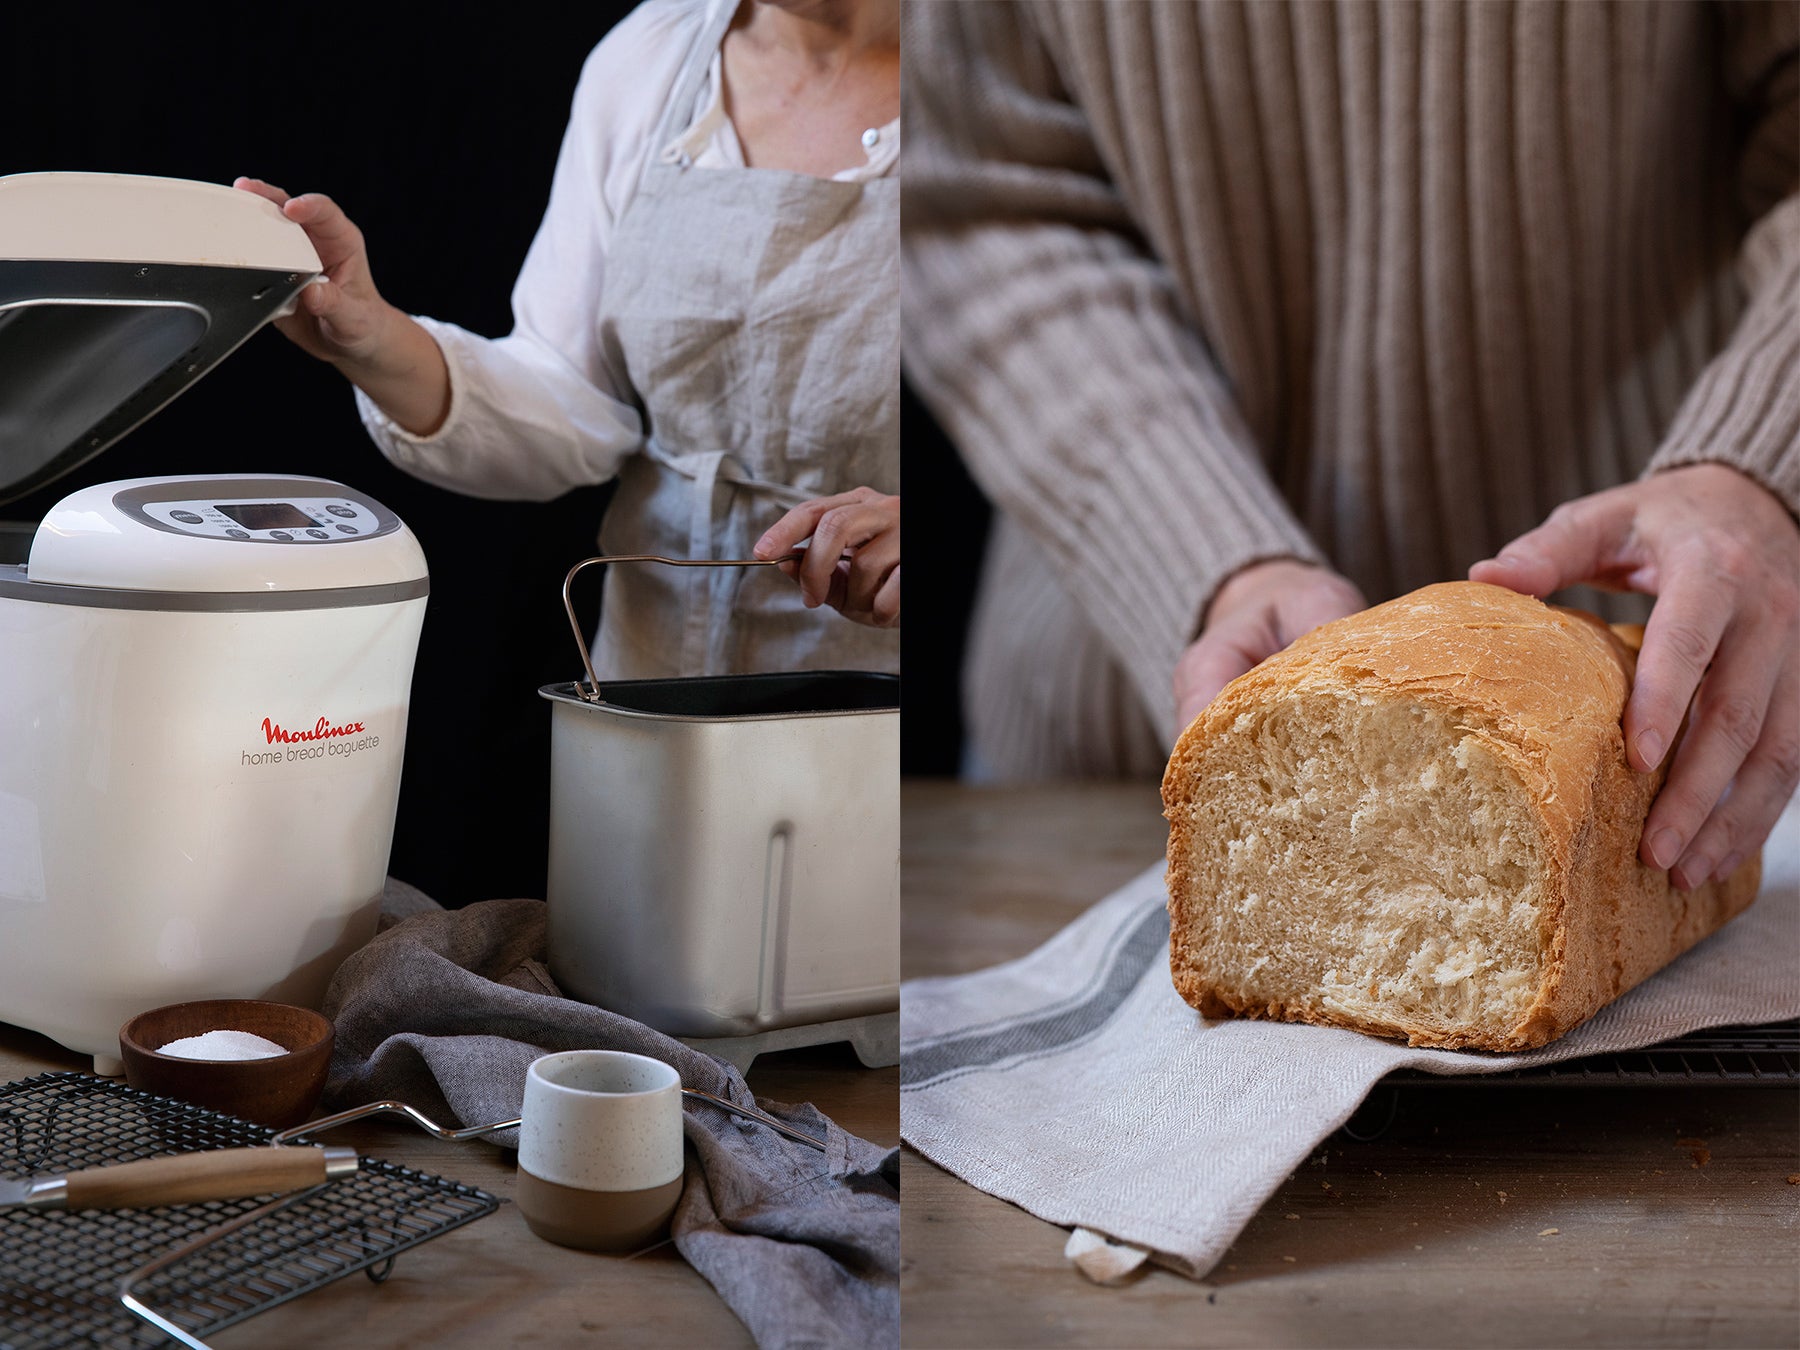 Moulinex home bread